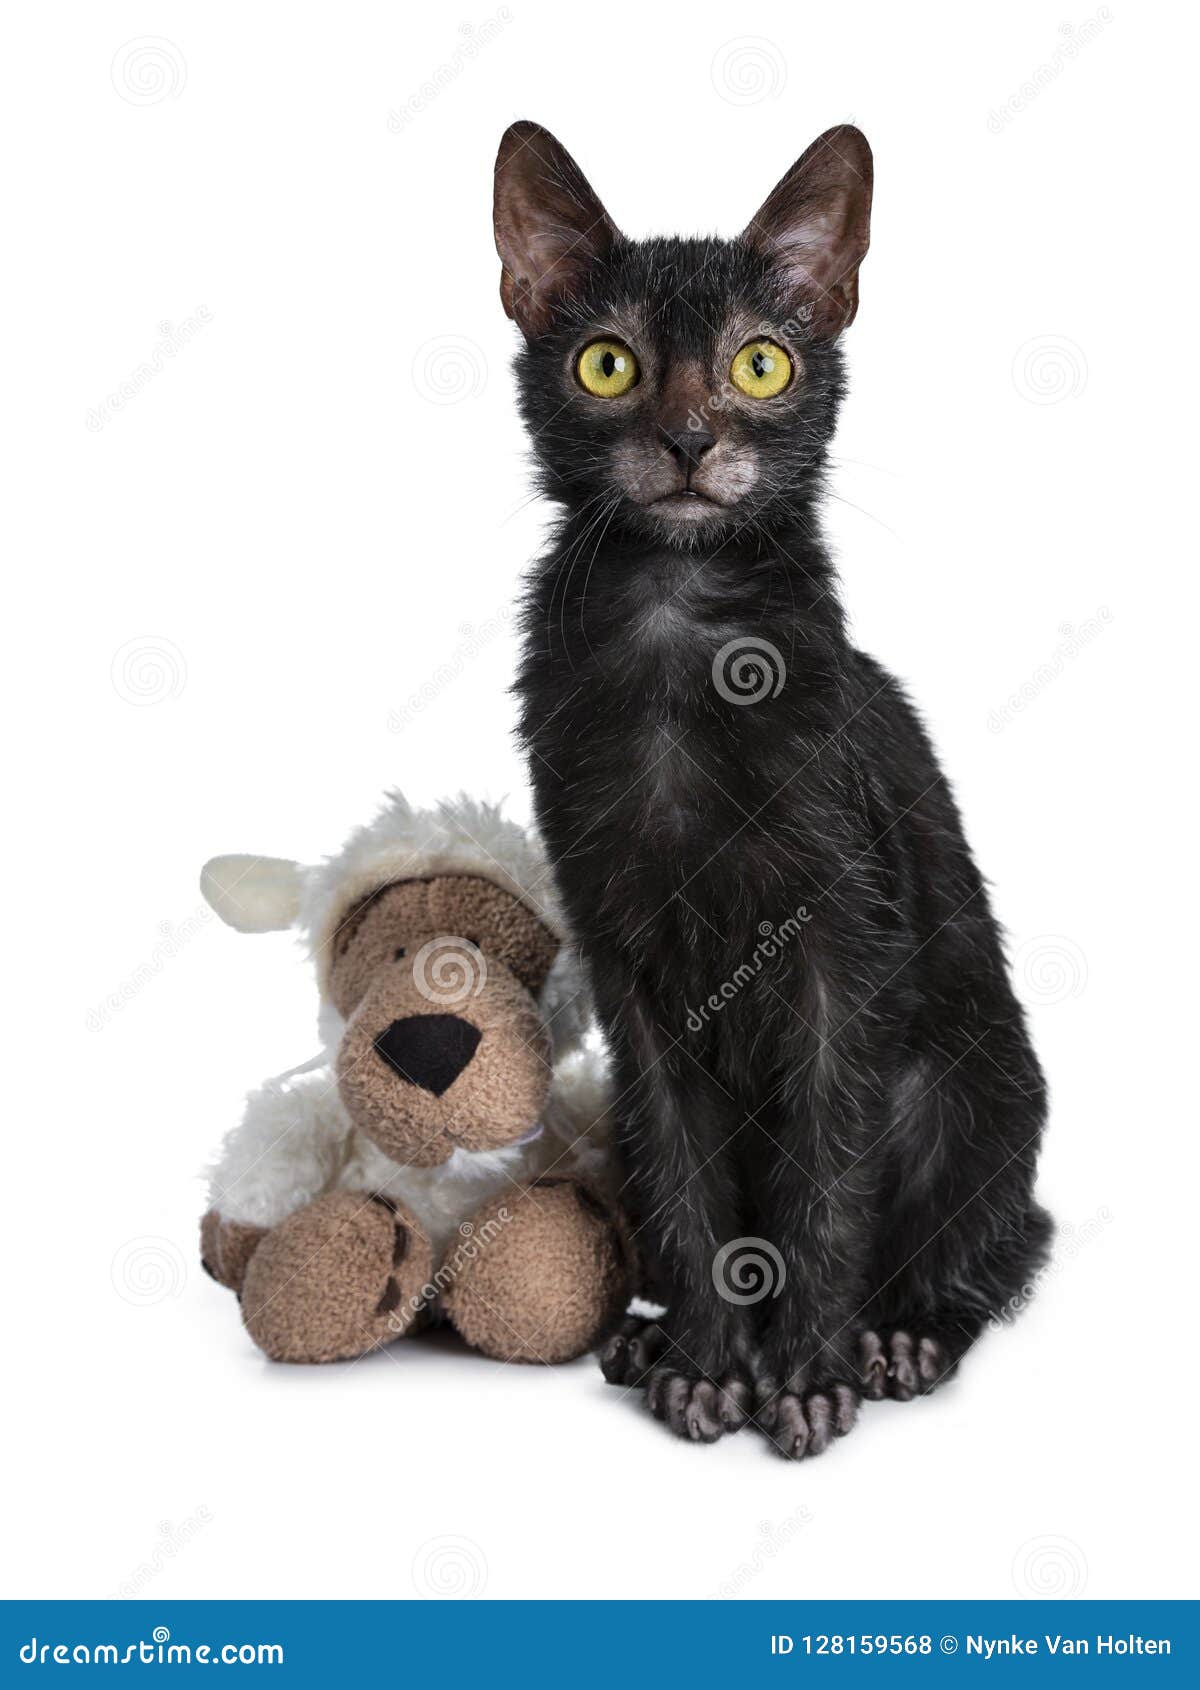 kitten black adult - 'kitten xxx ebony' Search - XVIDEOS.COM